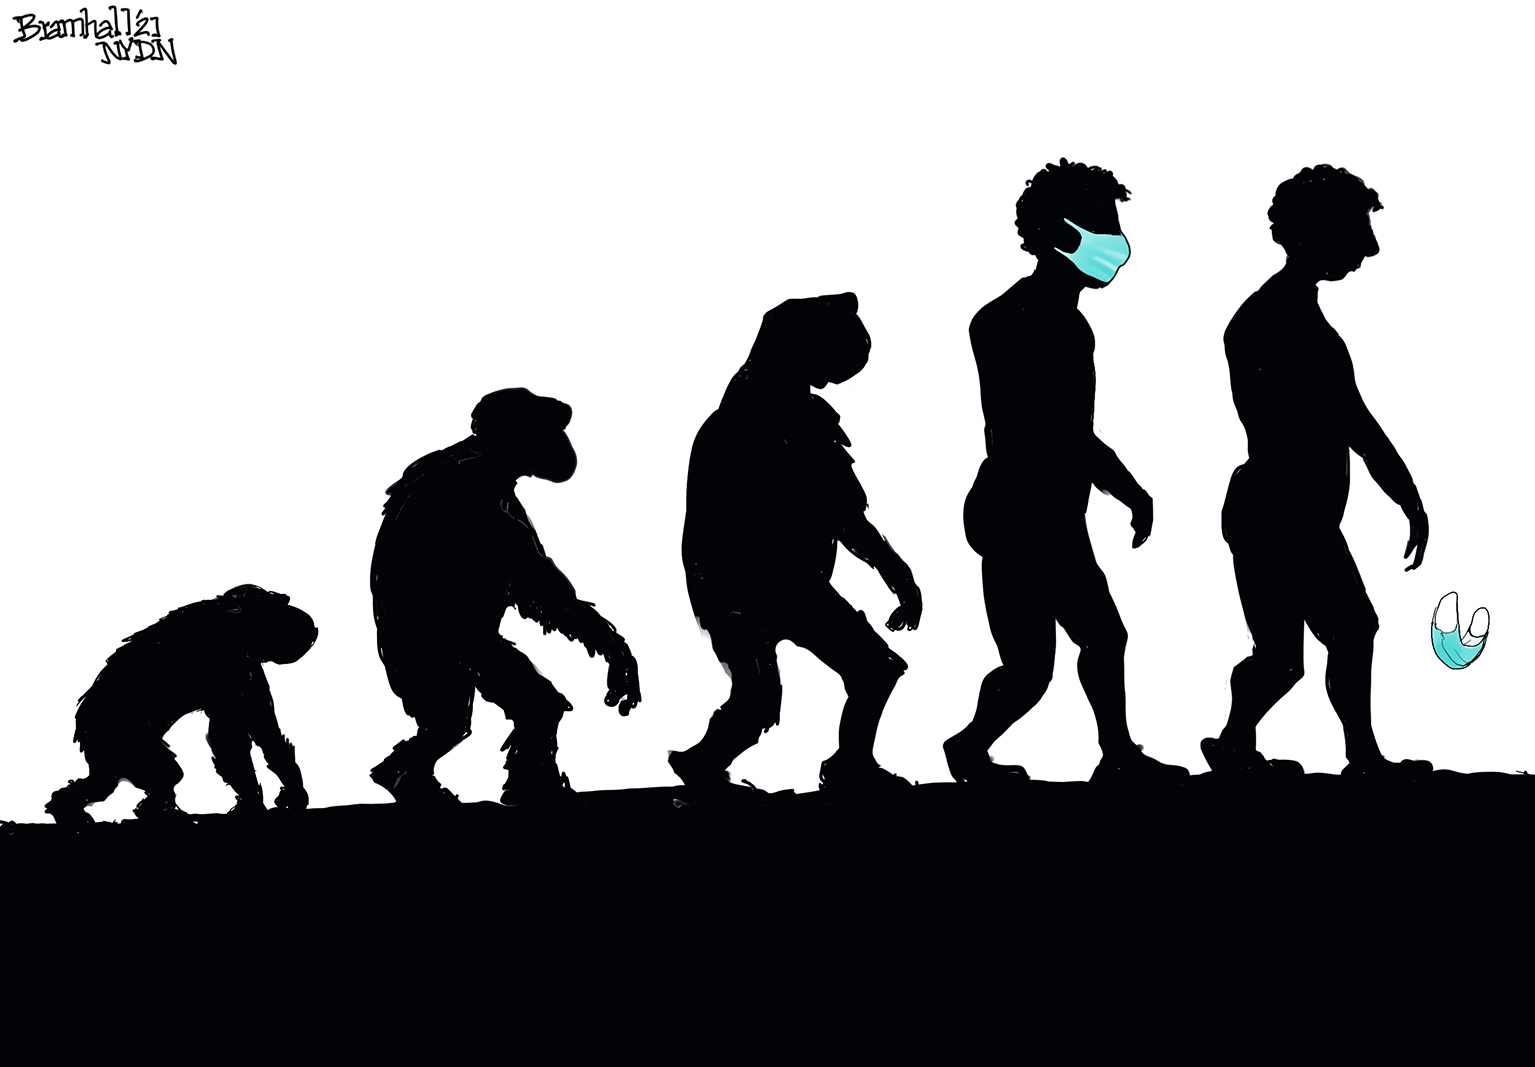 Evolution, 2021